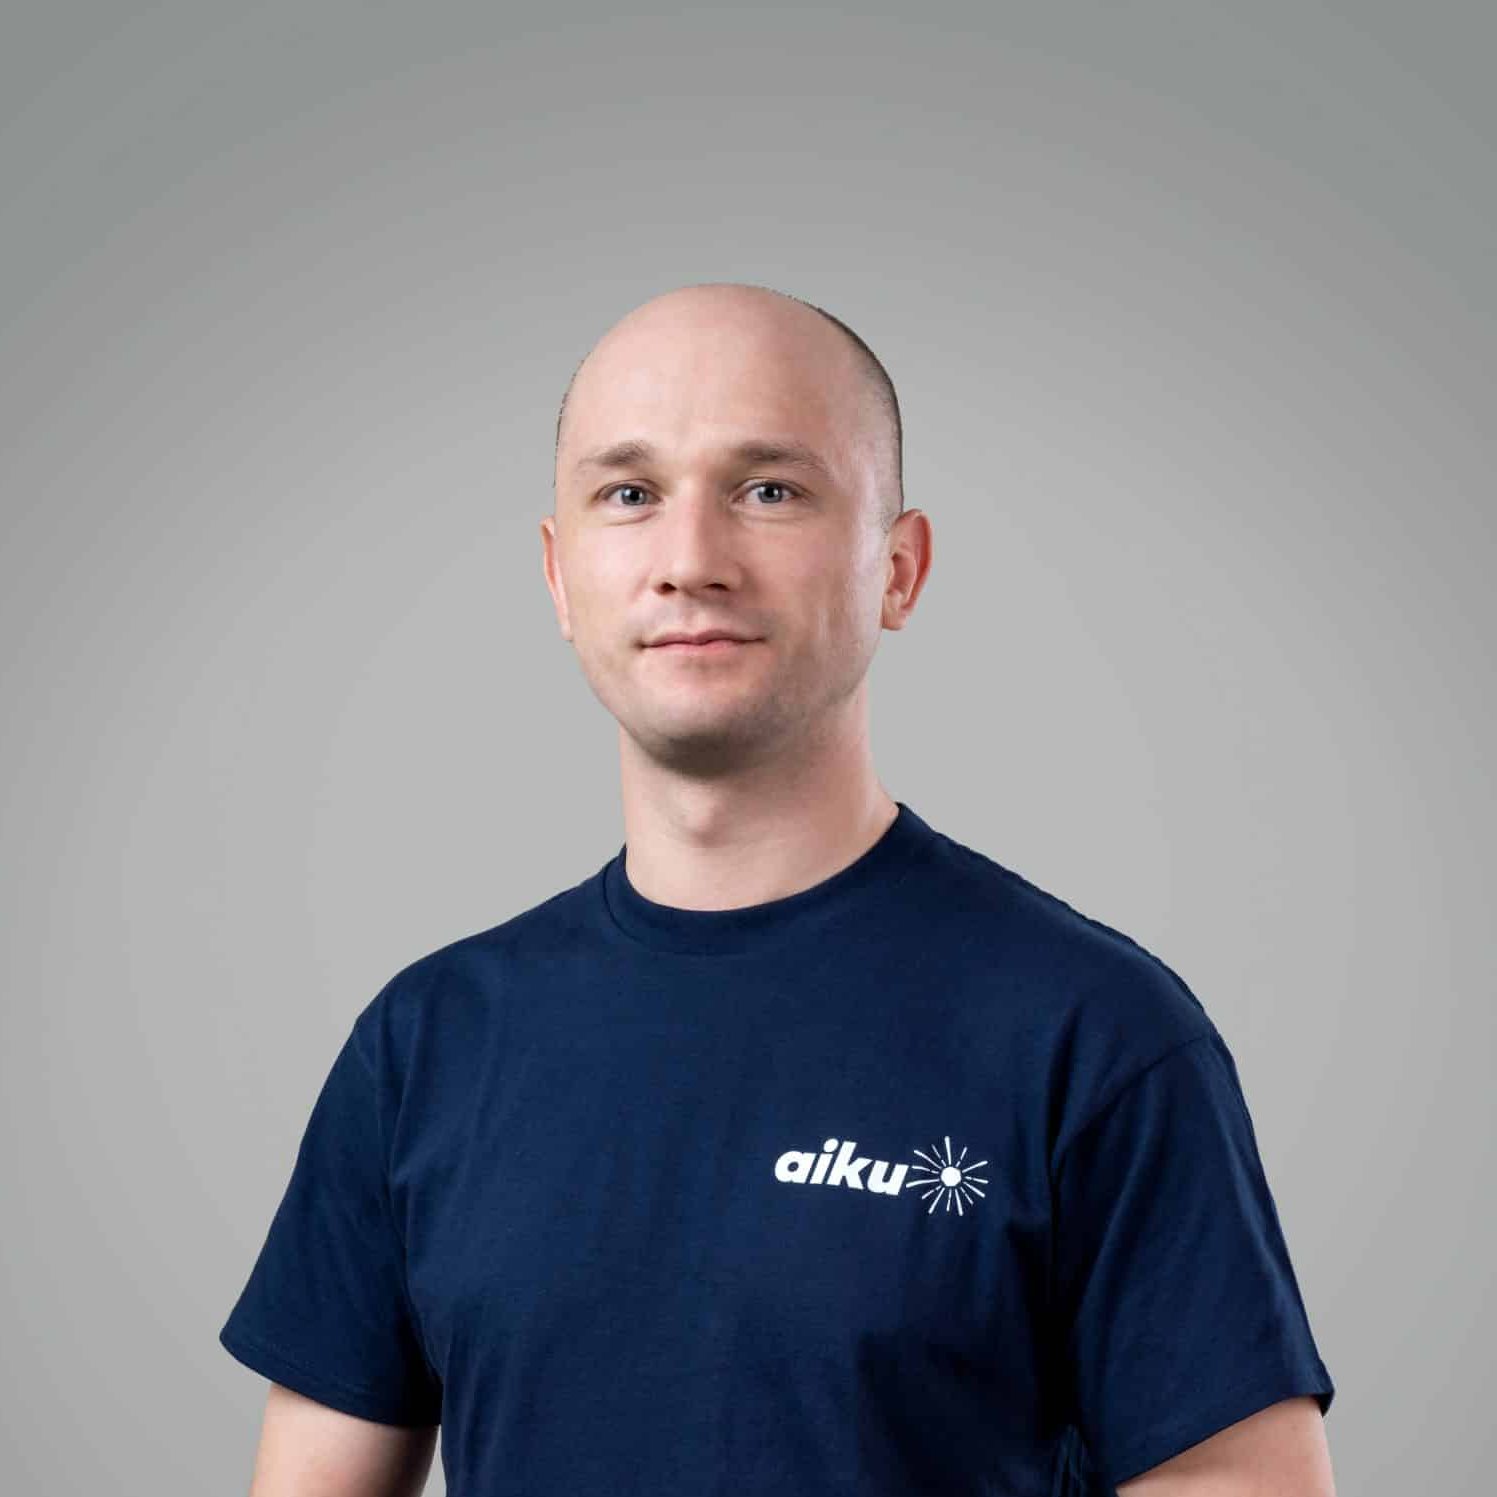 Team member Aiku Data Engineering CEO Siegfried Eckstedt